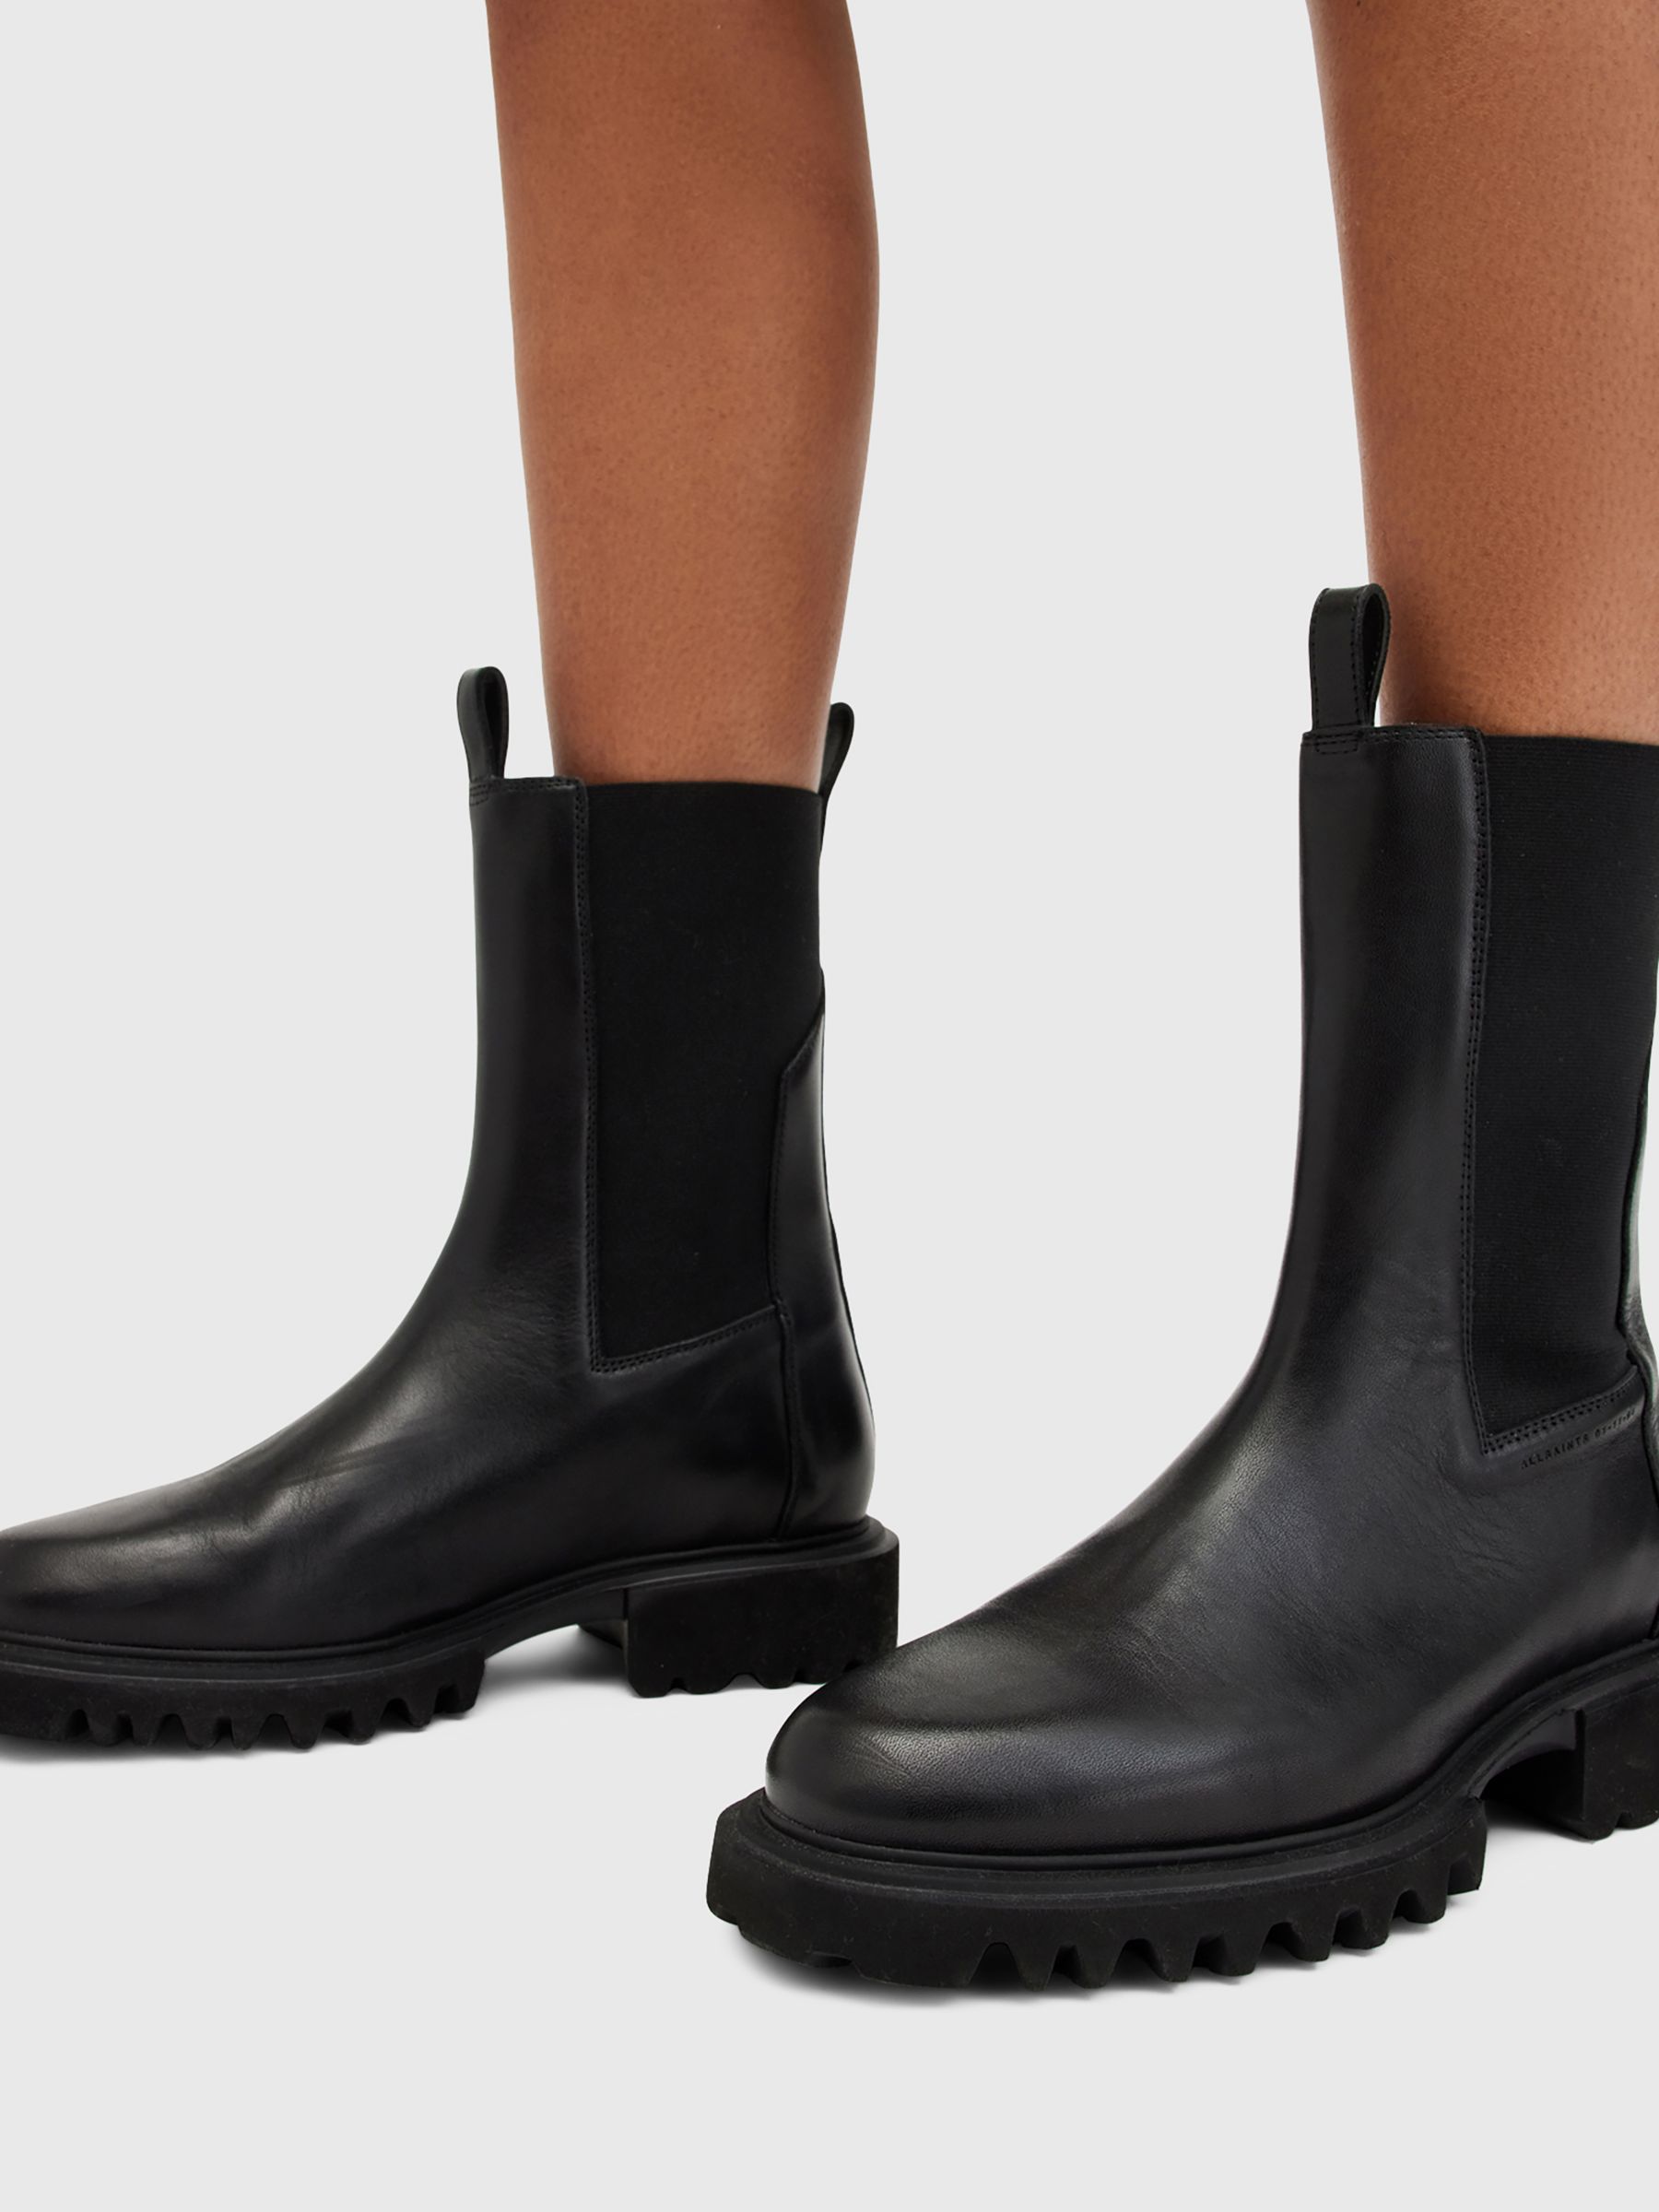 AllSaints Hallie Leather Boots, Black at John Lewis & Partners